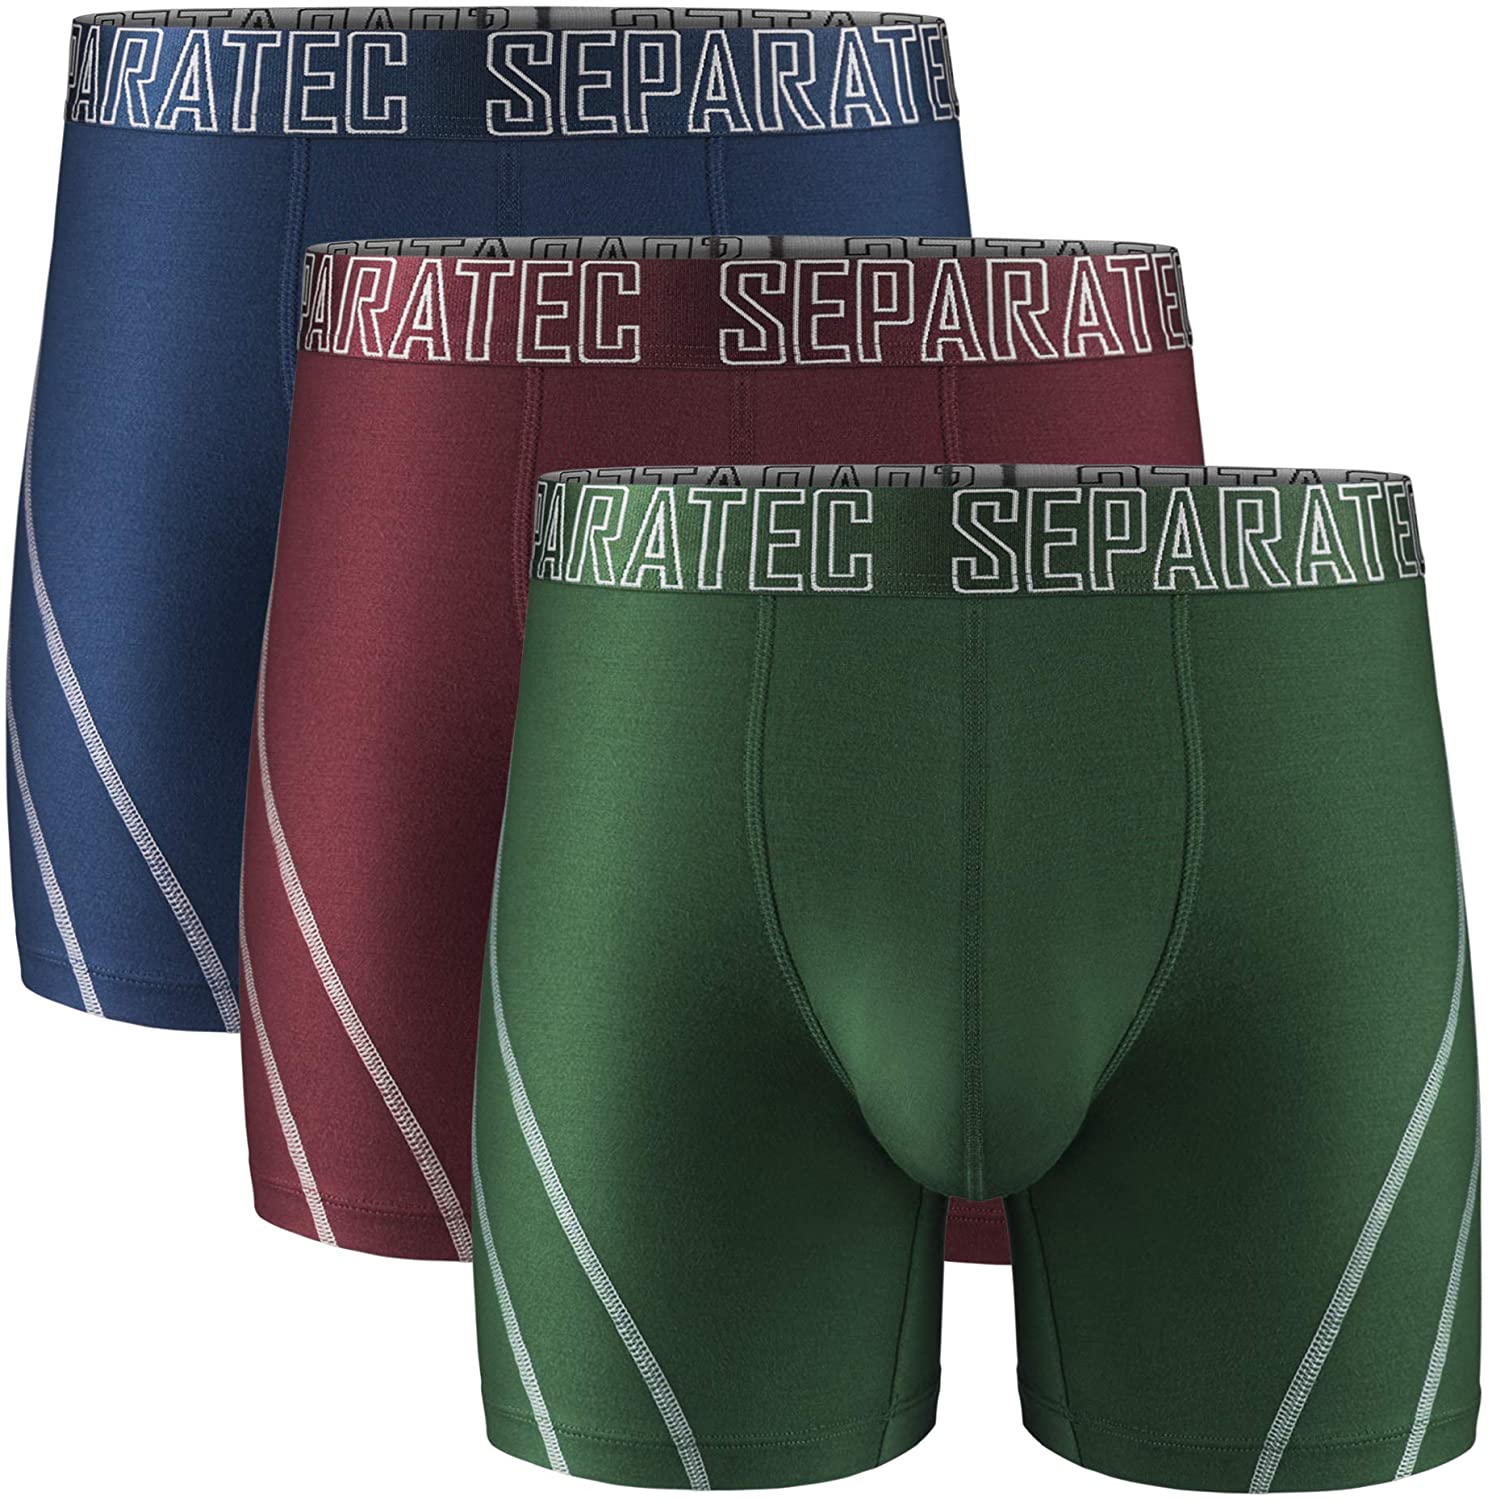 Separatec Men's Underwear Bamboo Rayon Boxer Palestine